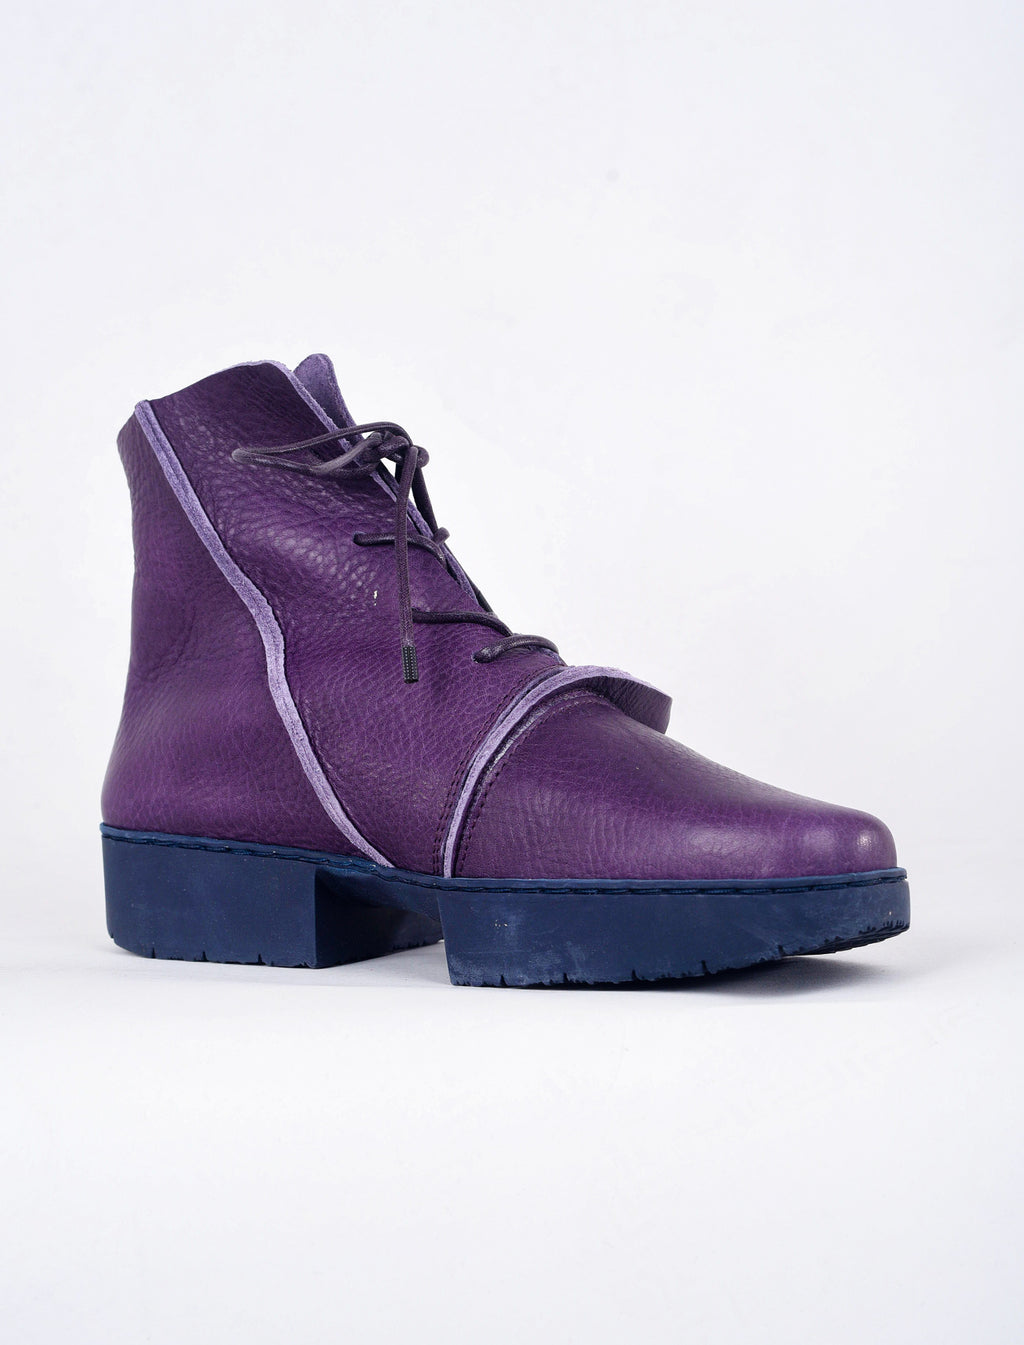 Trippen Shoes Velocity Sport Boot, Purple Notte Waw 